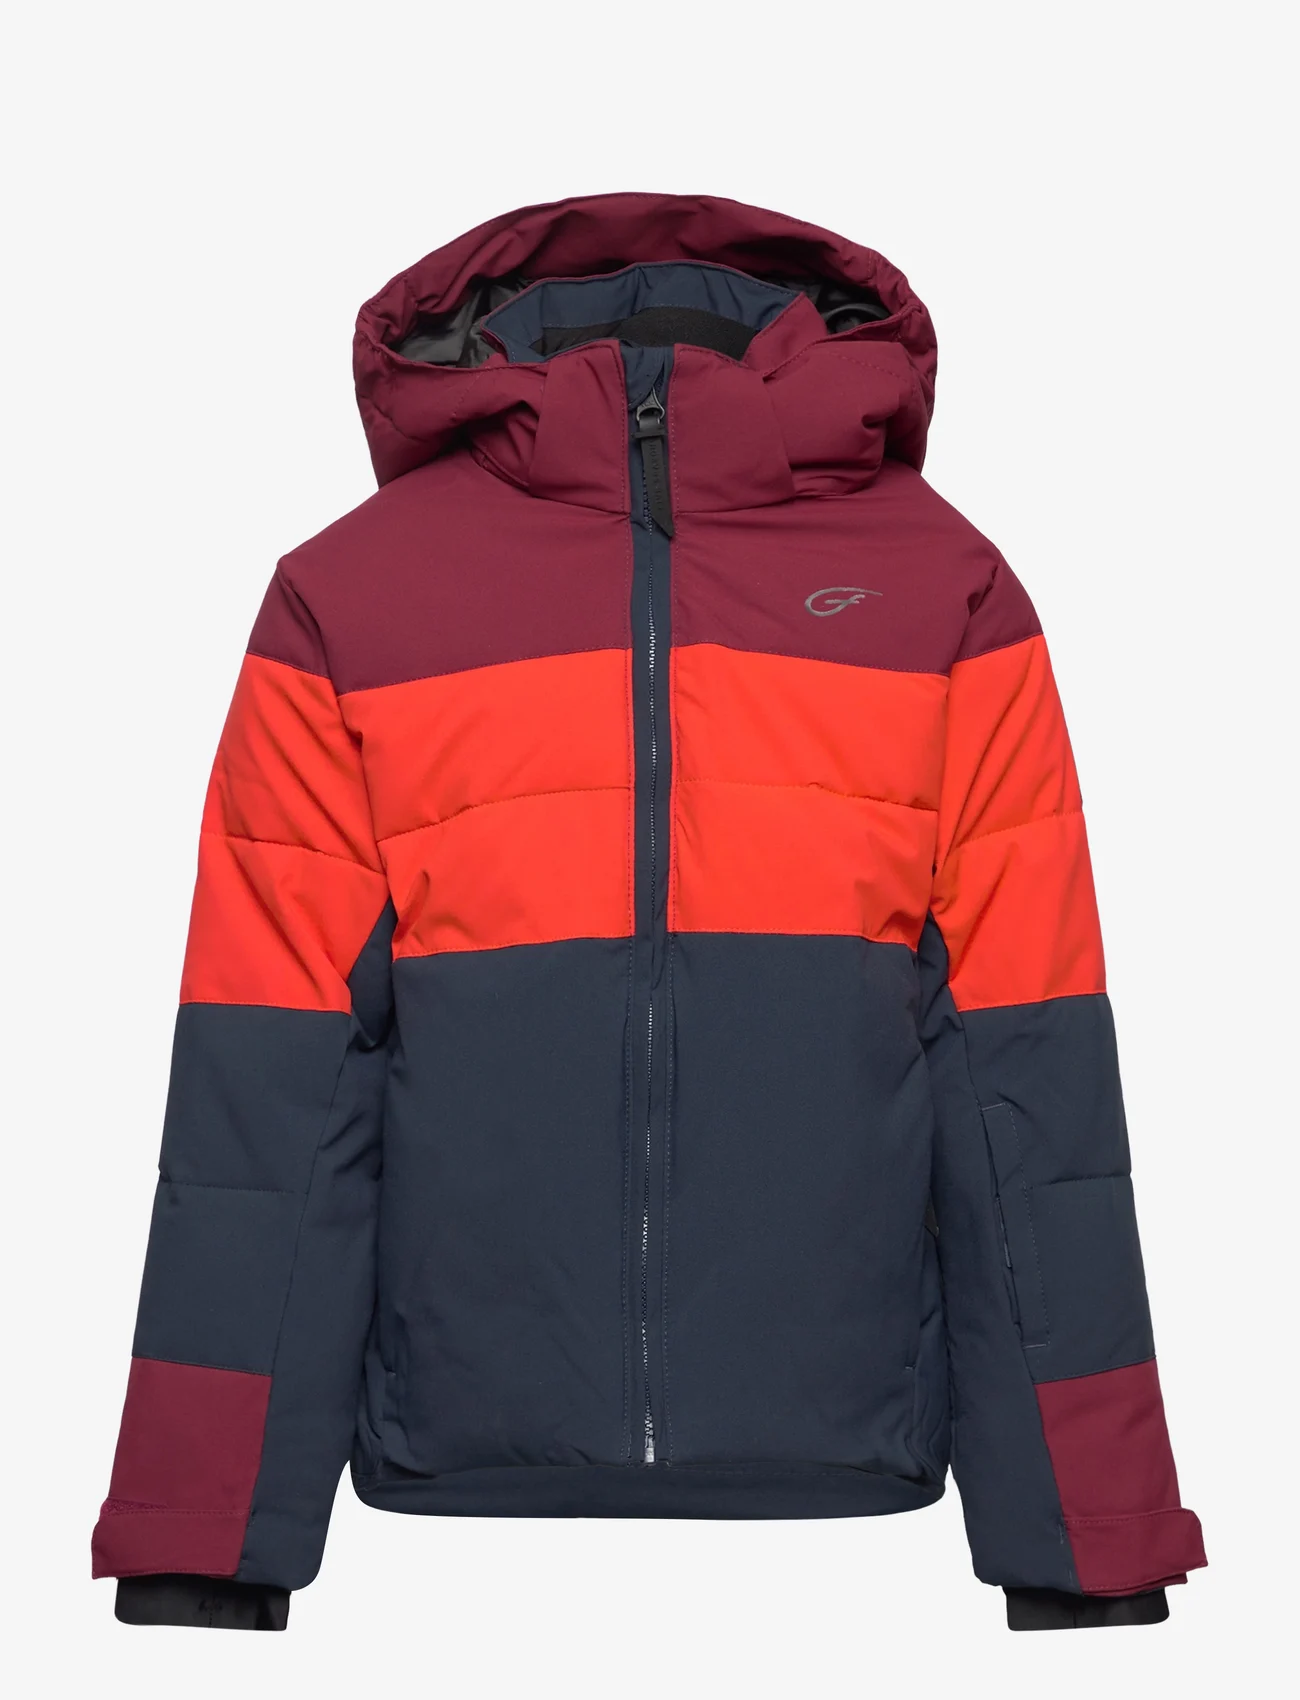 Five Seasons - VALLOIRE JKT JR - ski jackets - poinciana - 0